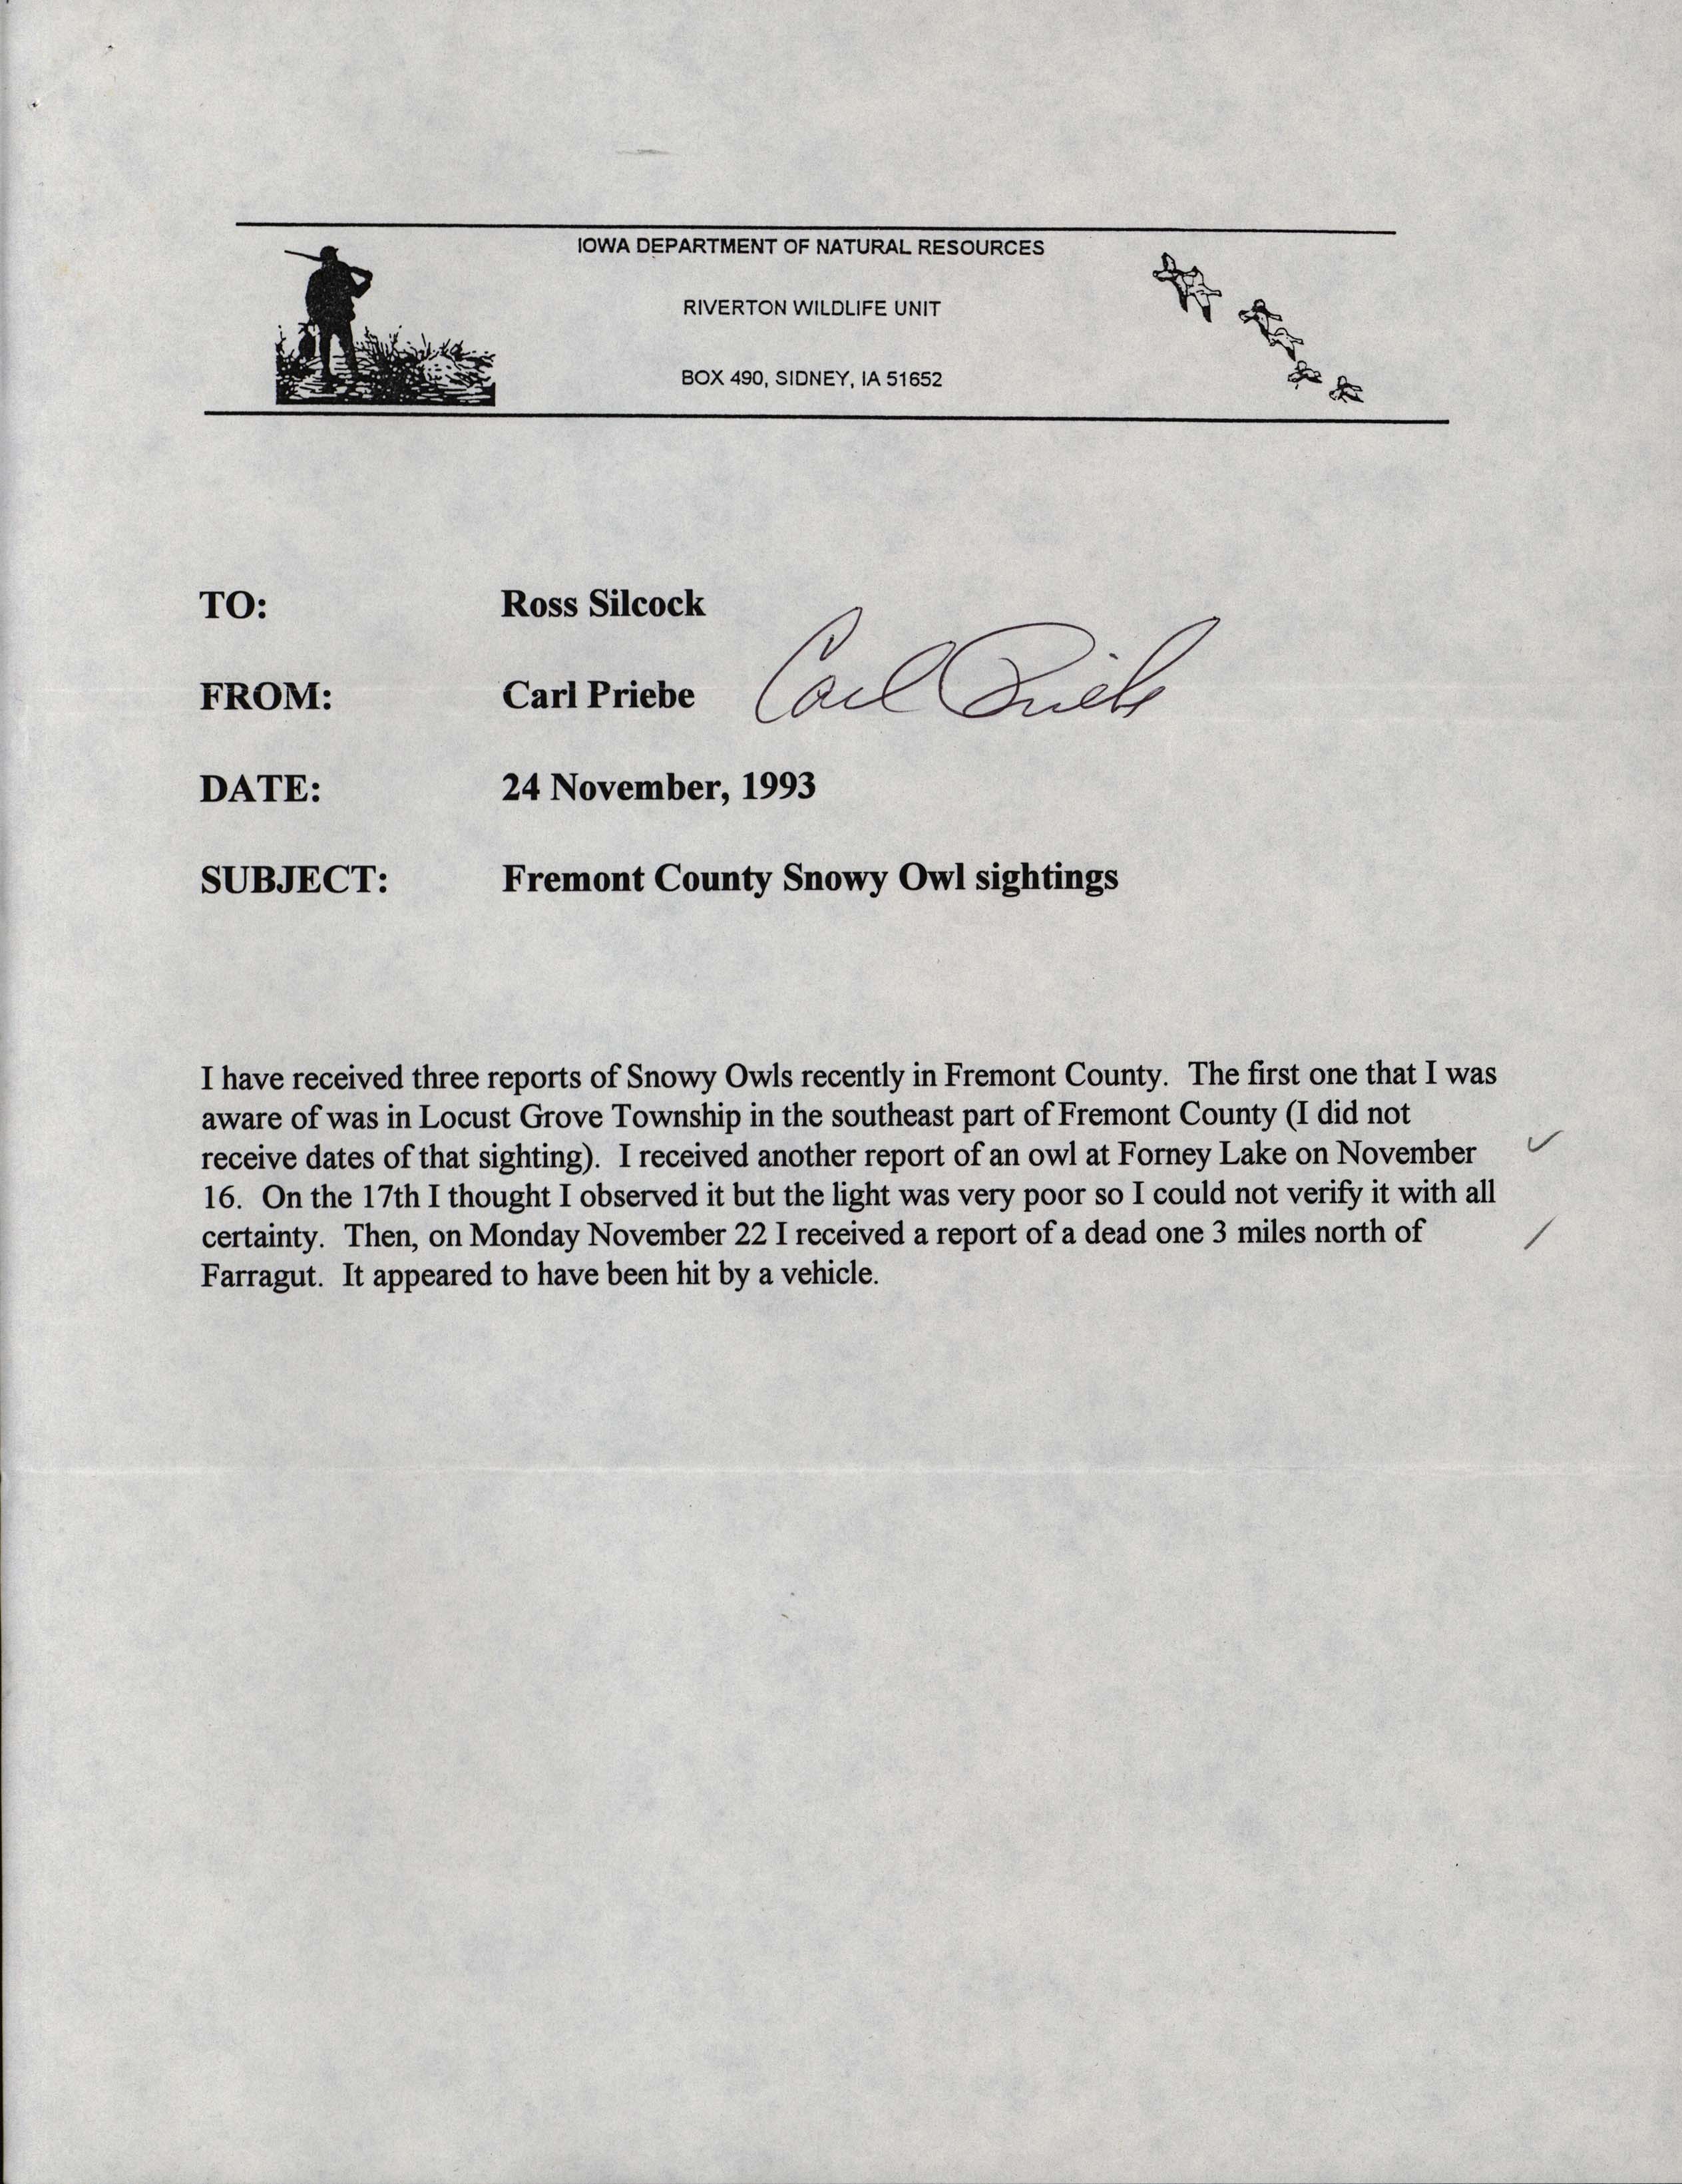 Carl Priebe letter to W. Ross Silcock regarding Fremont County Snowy Owl sightings, November 24, 1993